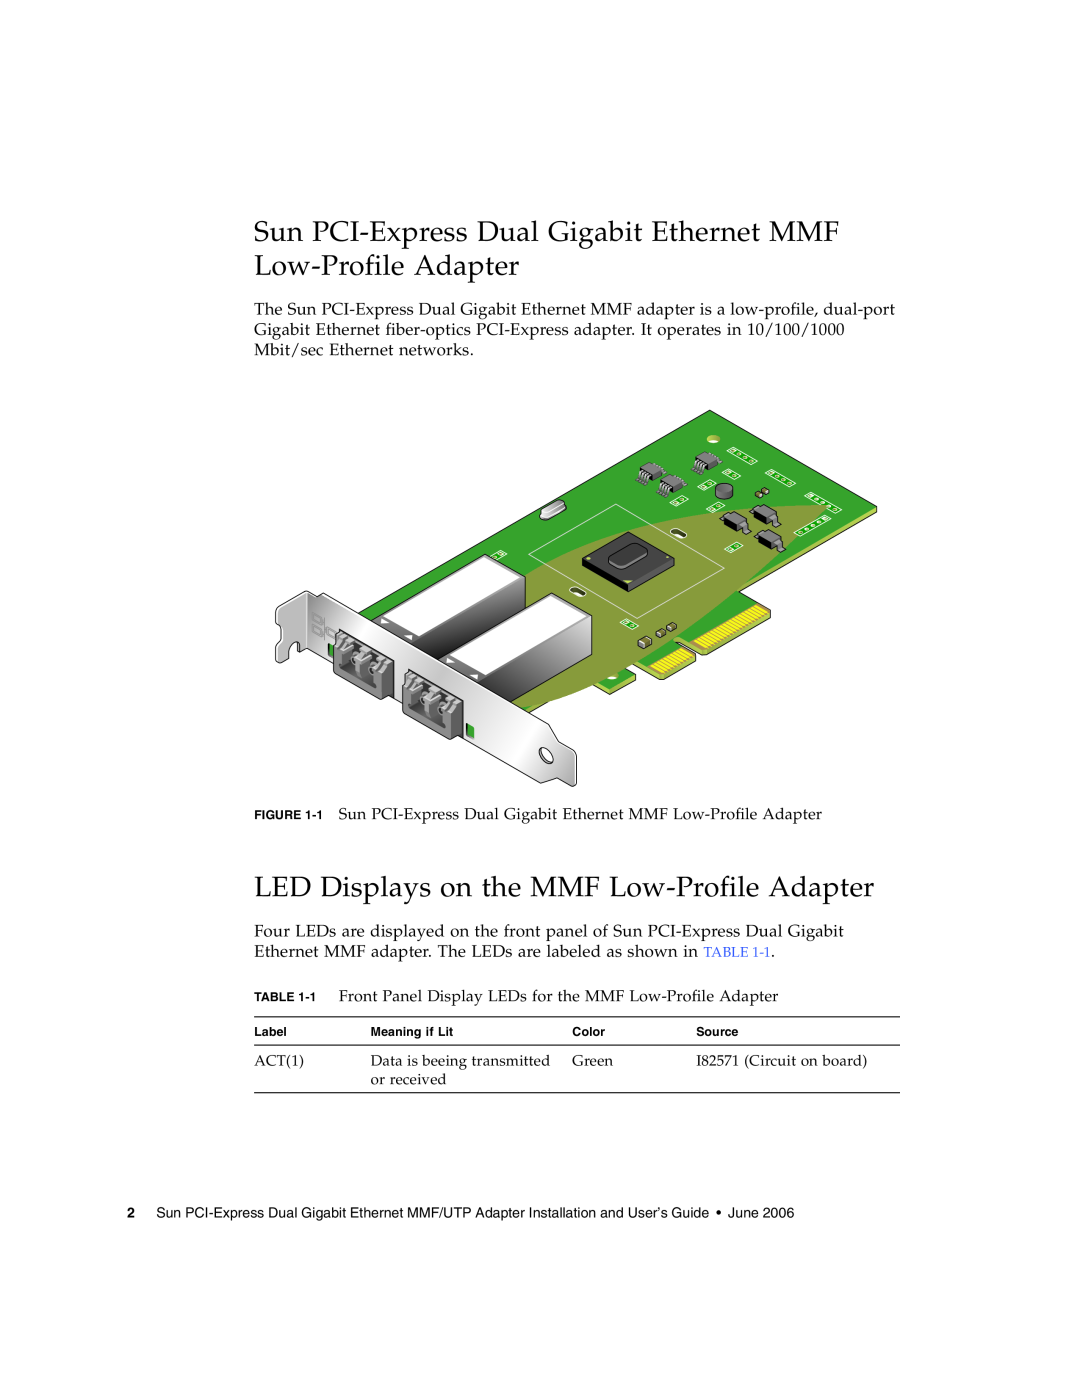 Sun Microsystems Gigabit Ethernet MMF/UTP Adapter manual Sun PCI-Express Dual Gigabit Ethernet MMF Low-Profile Adapter 